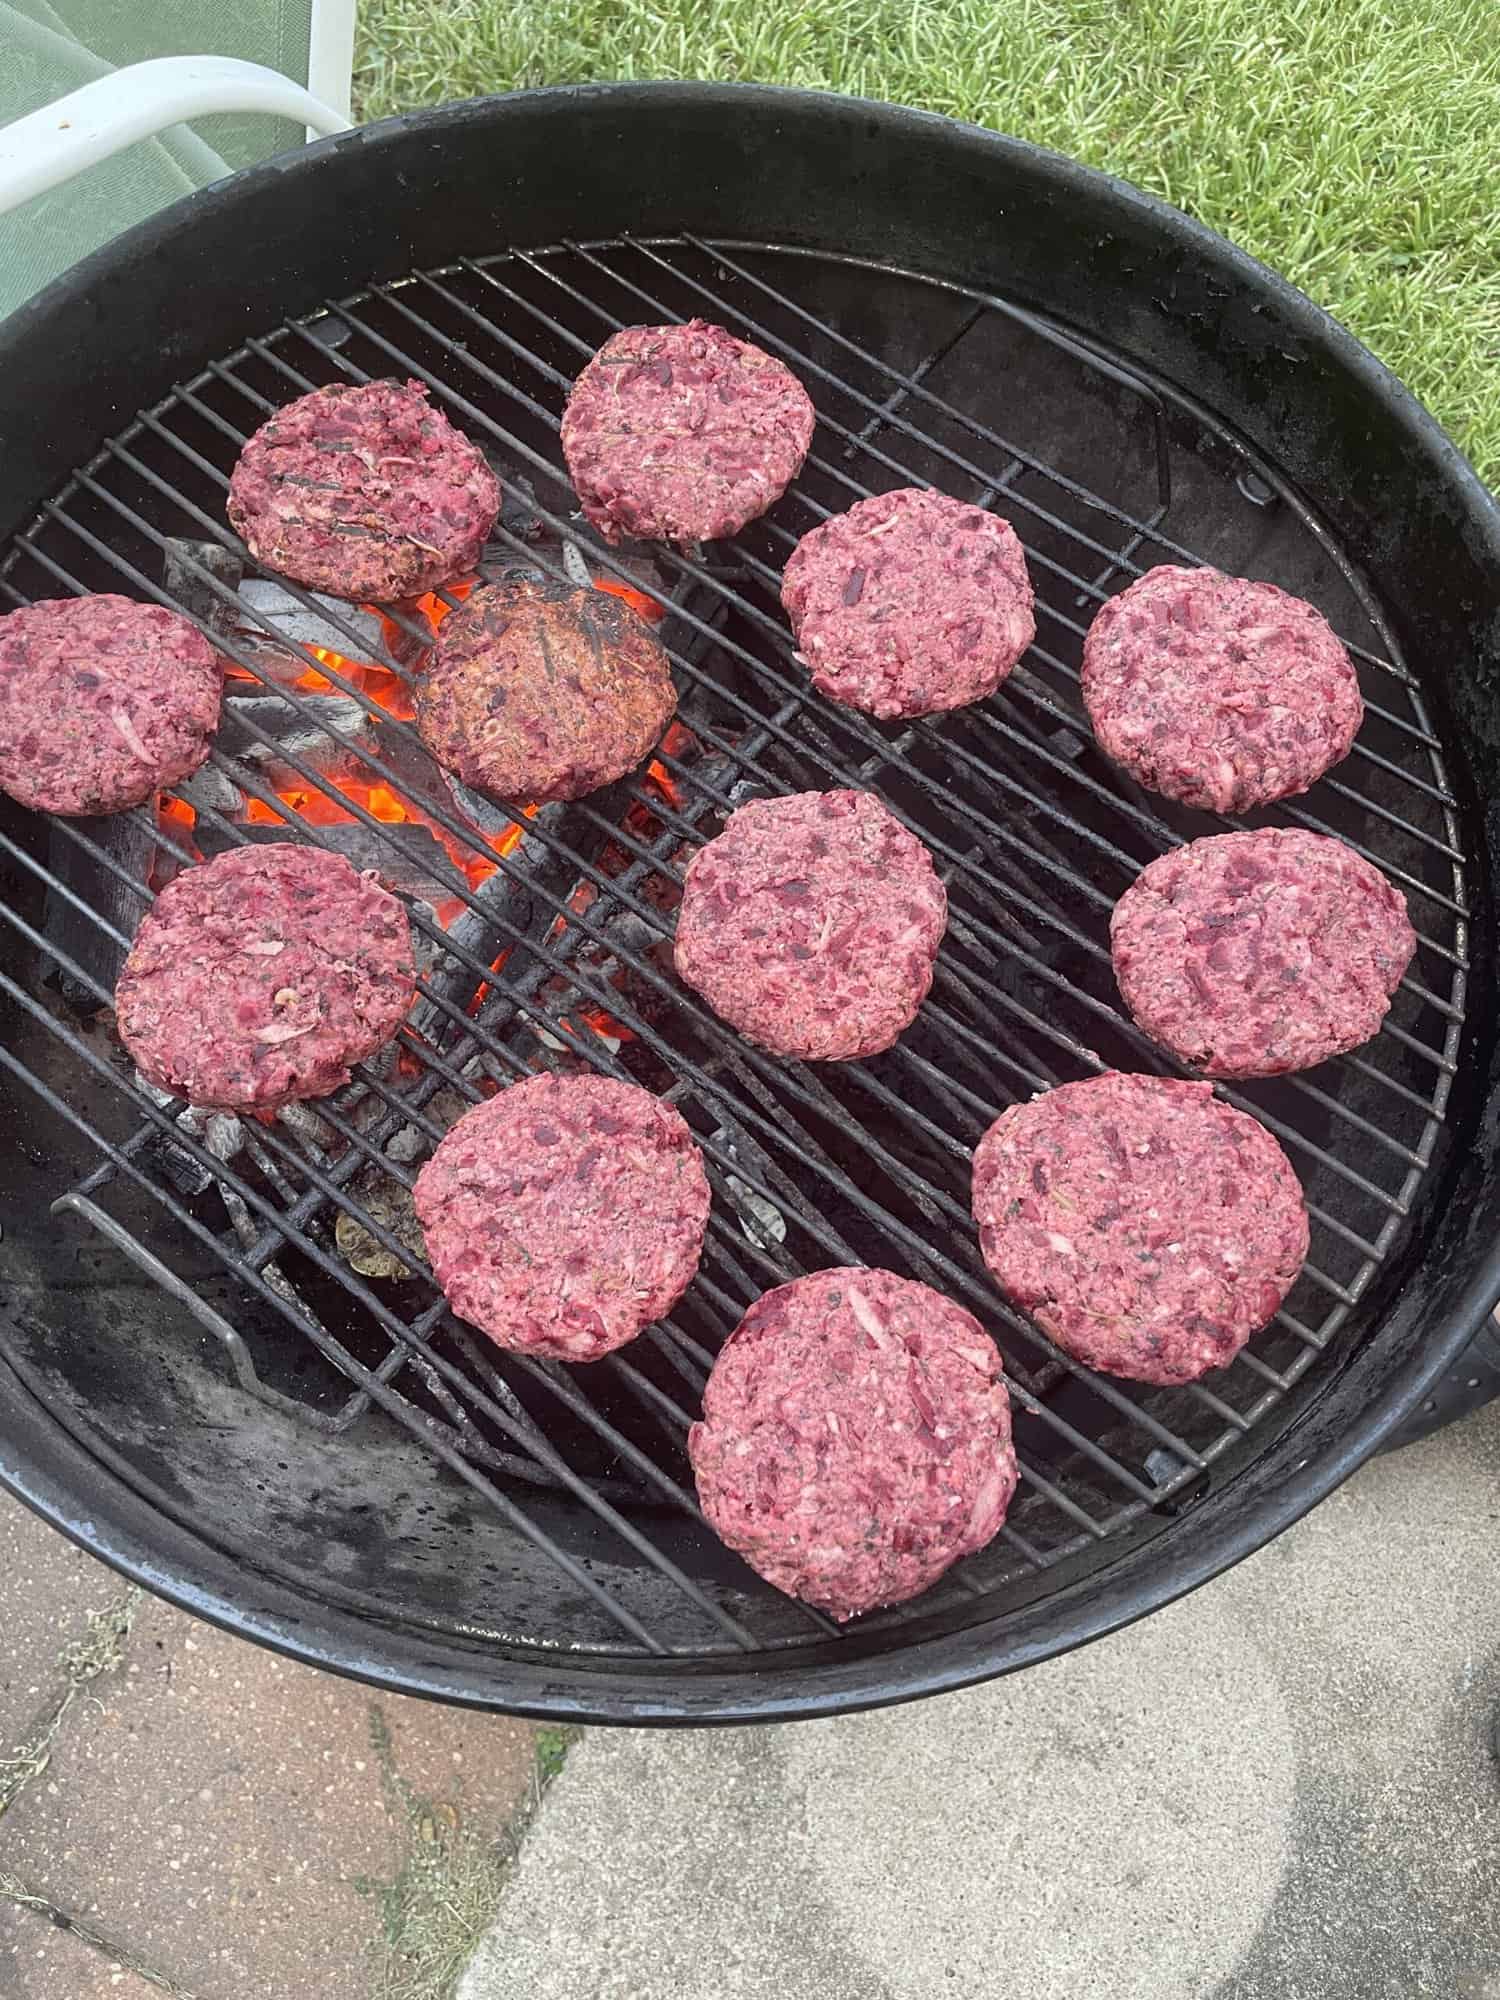 Grilling vegan beet burgers over charcoal Weber grill